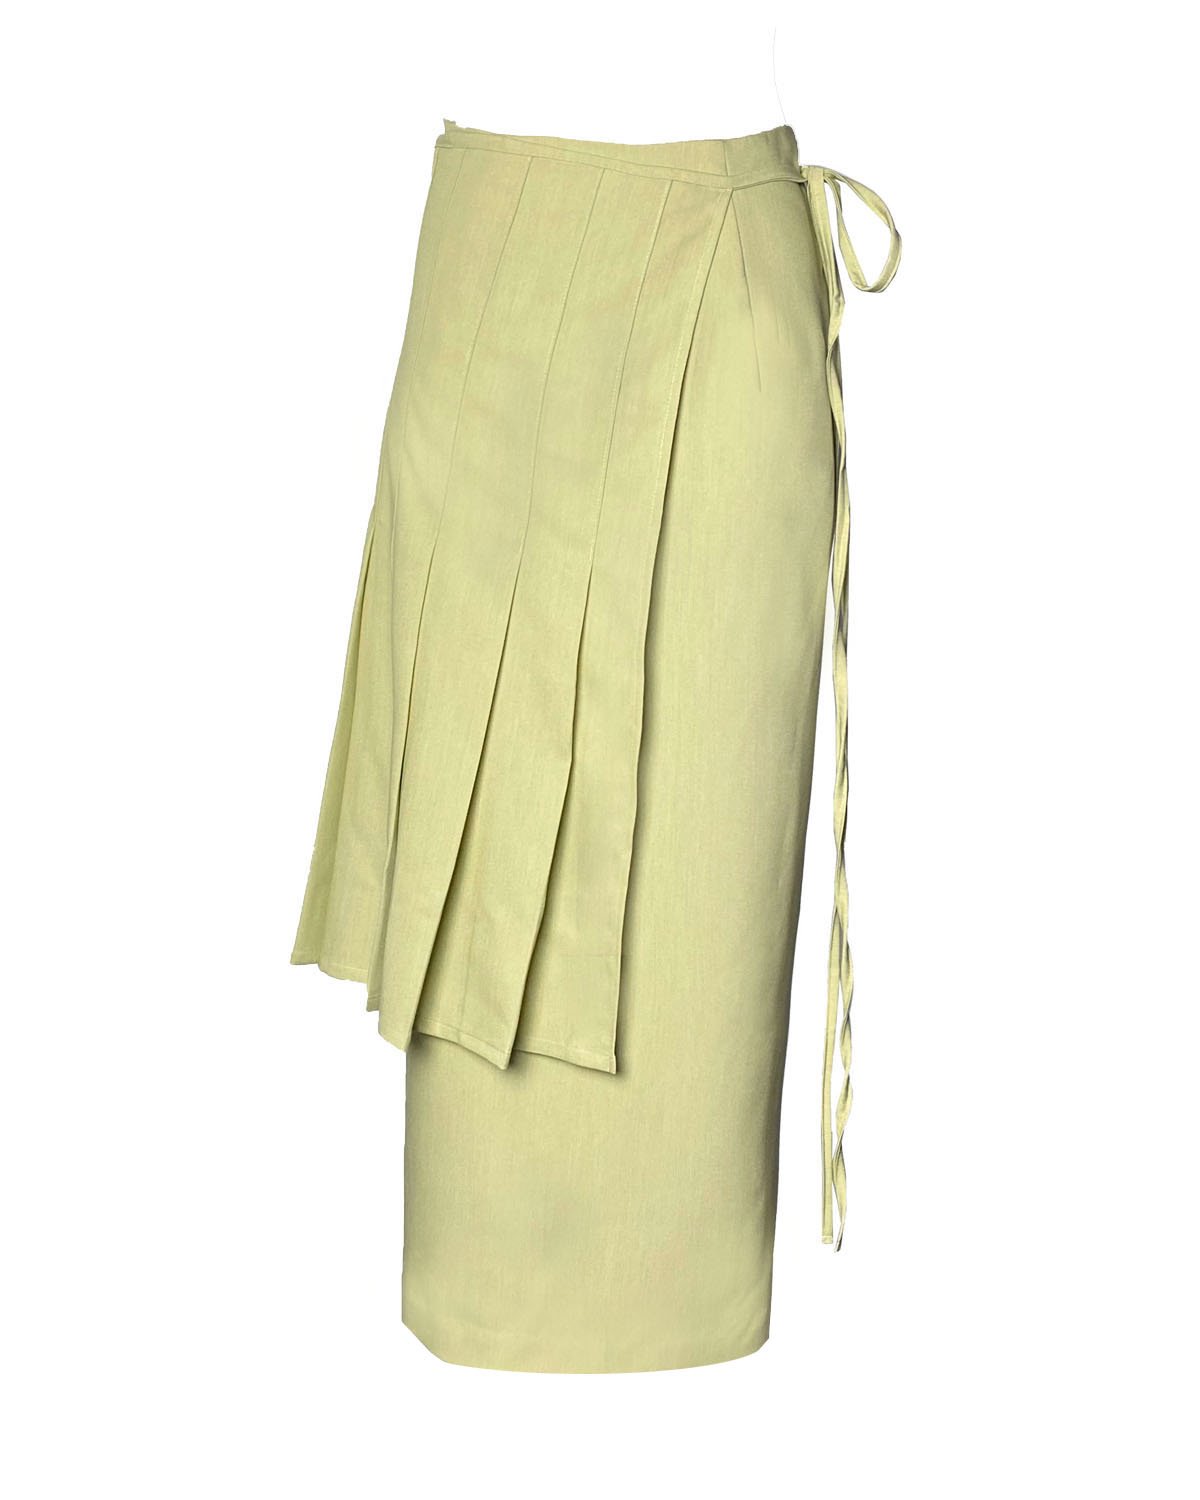 Pleats layered skirt 117.000₩→60,000₩